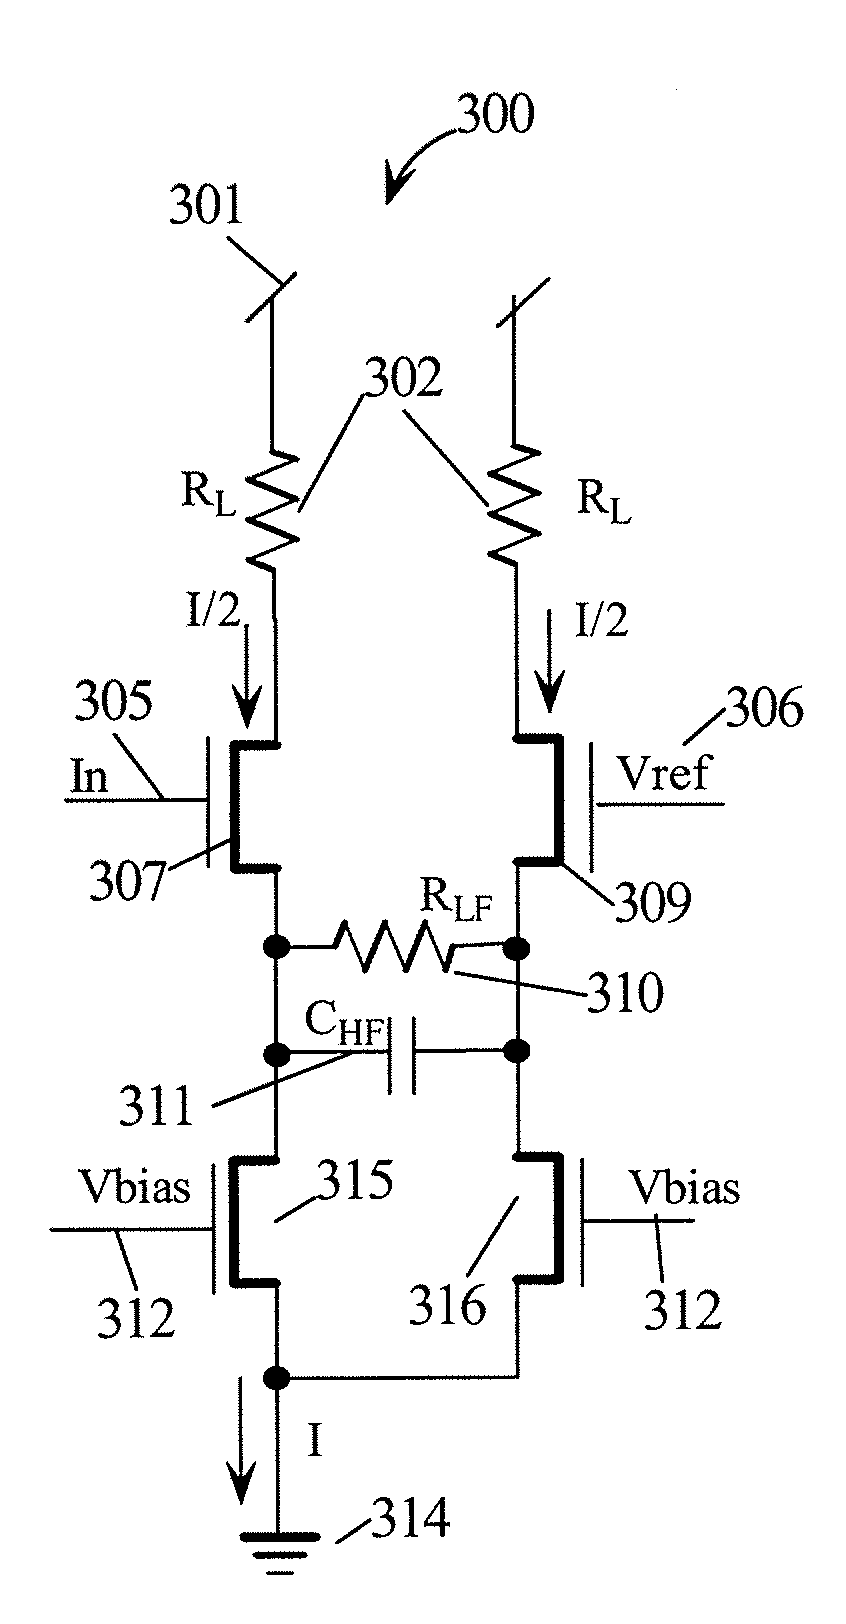 Peaking transmission line receiver for logic signals